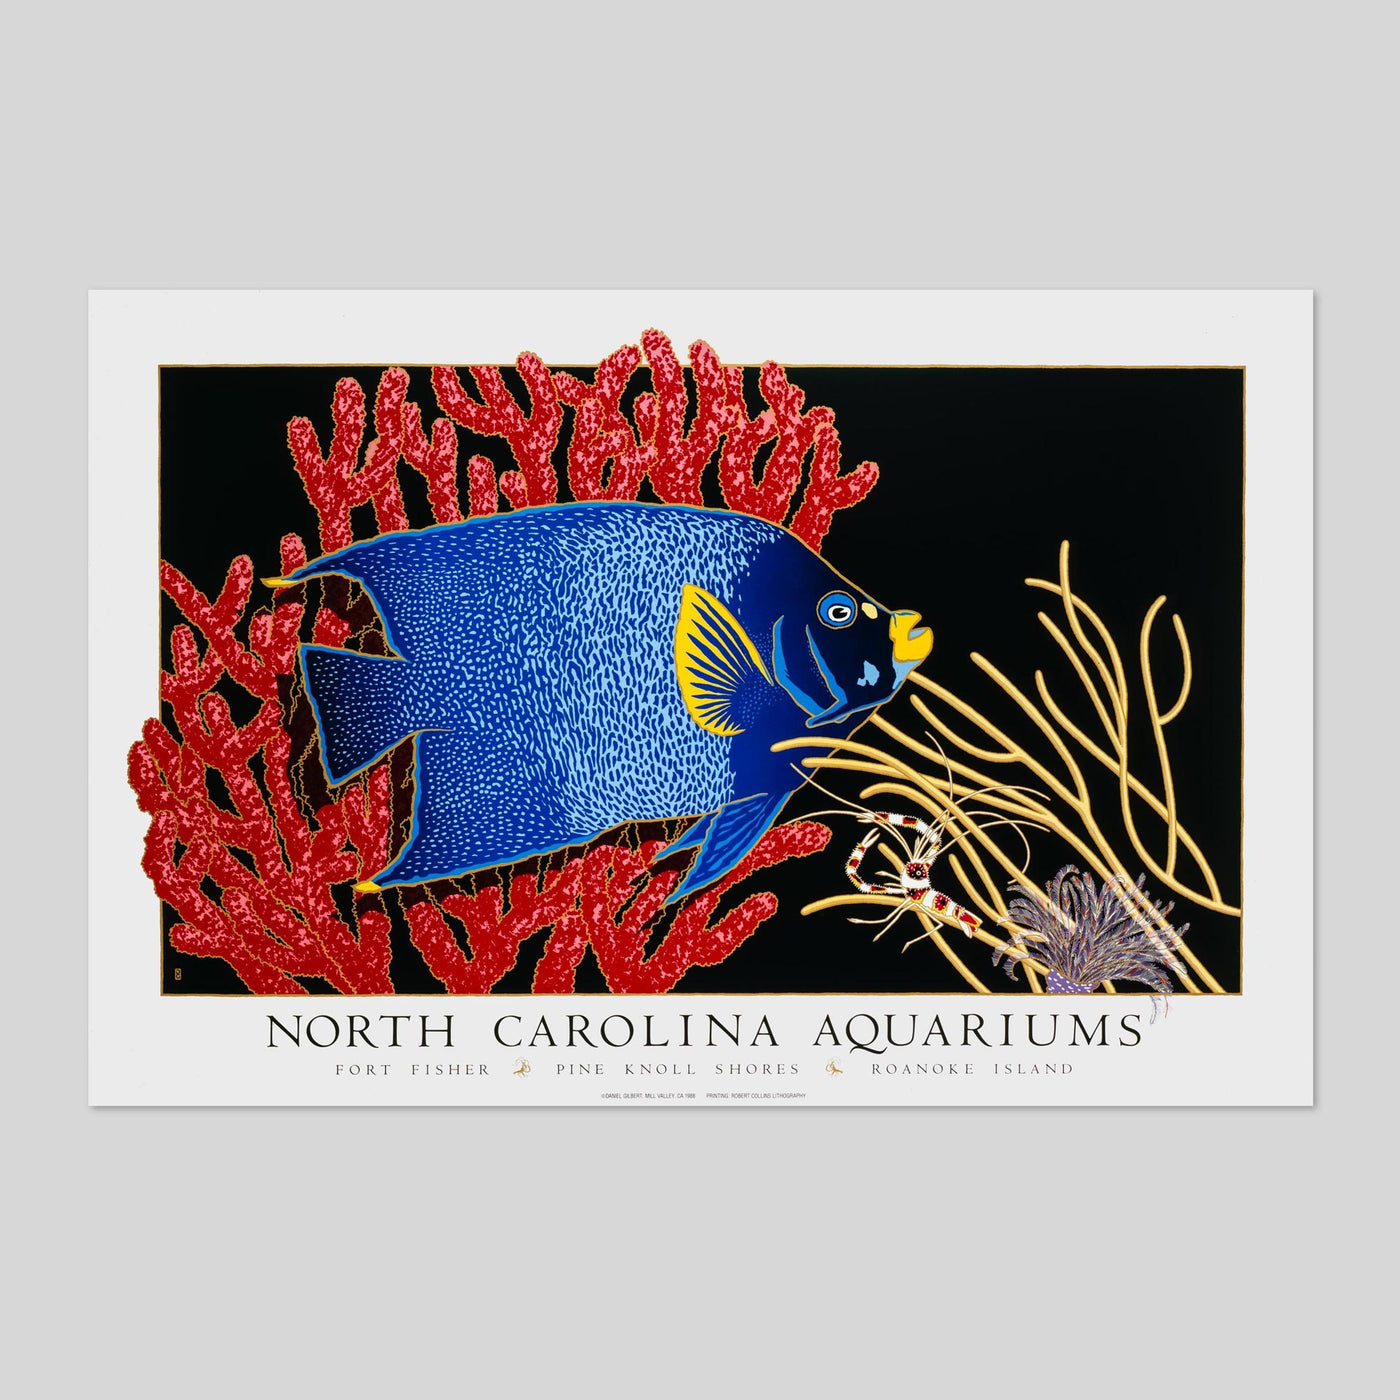 North Carolina Aquarium - by Dan Gilbert